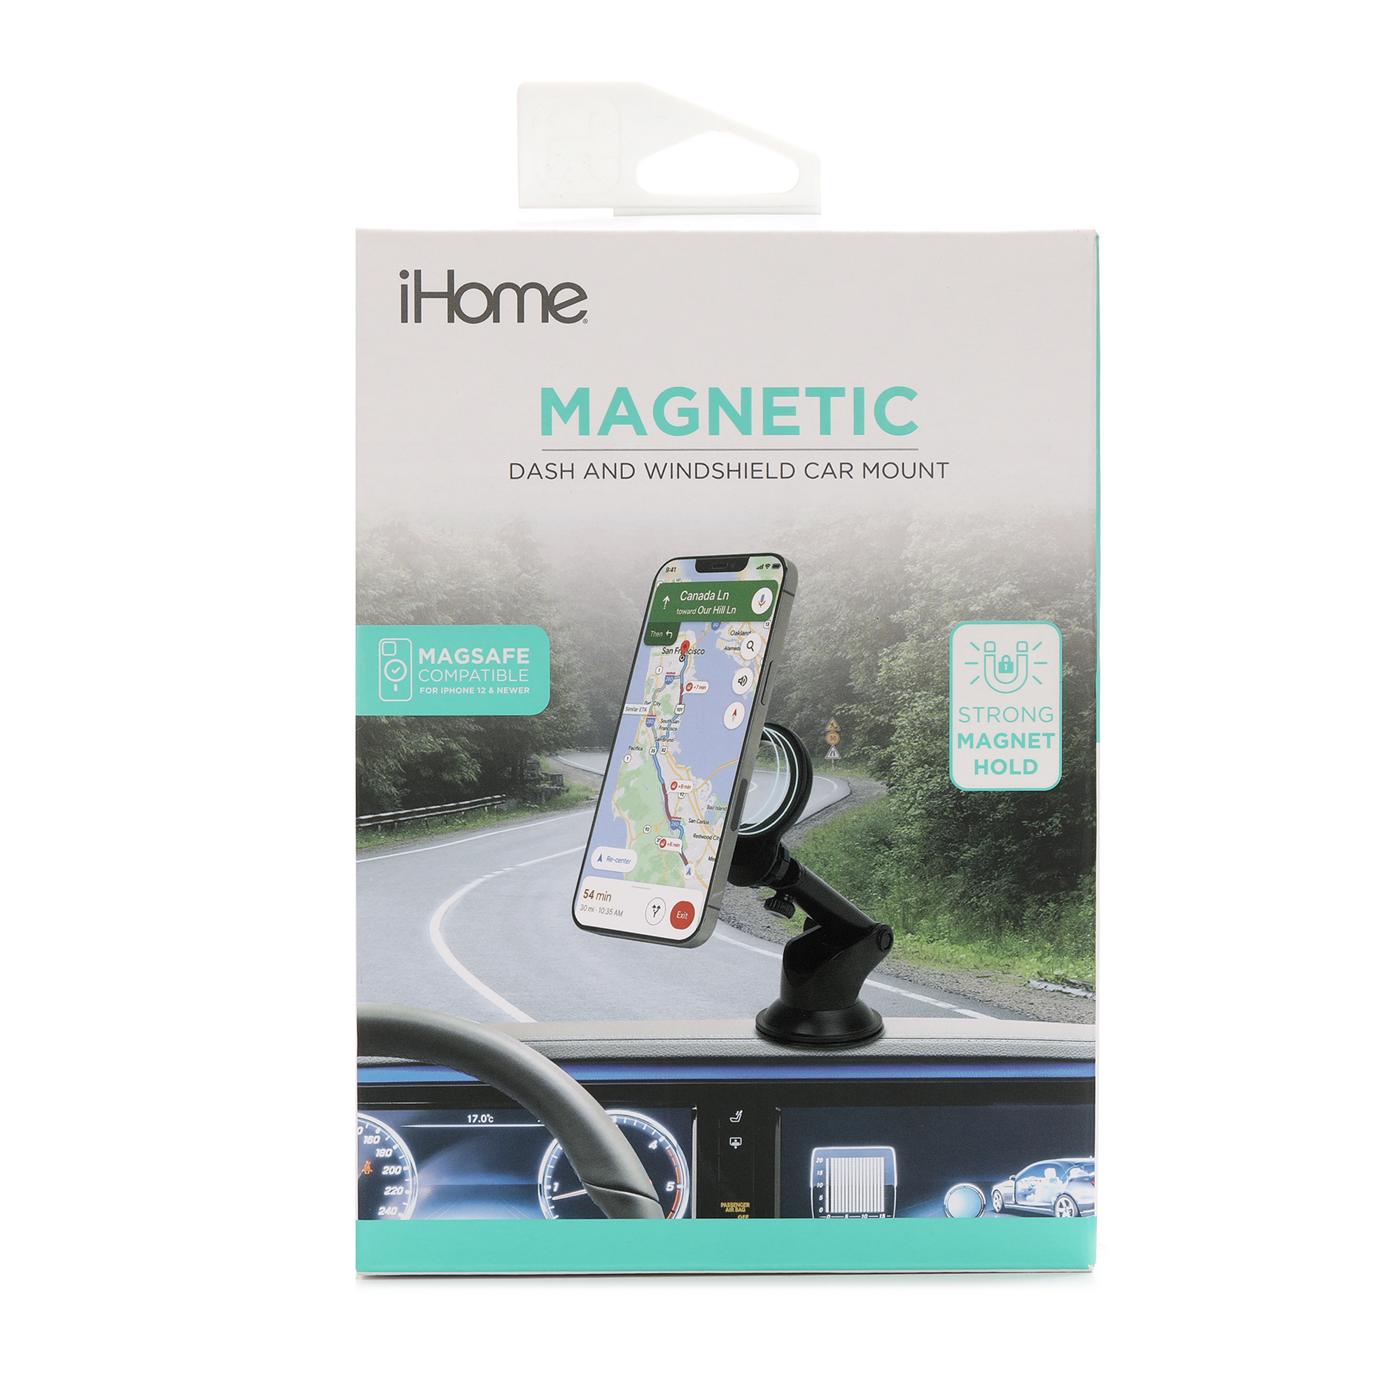 iHome Magnetic Dash & Windshield Car Mount - Black; image 1 of 2